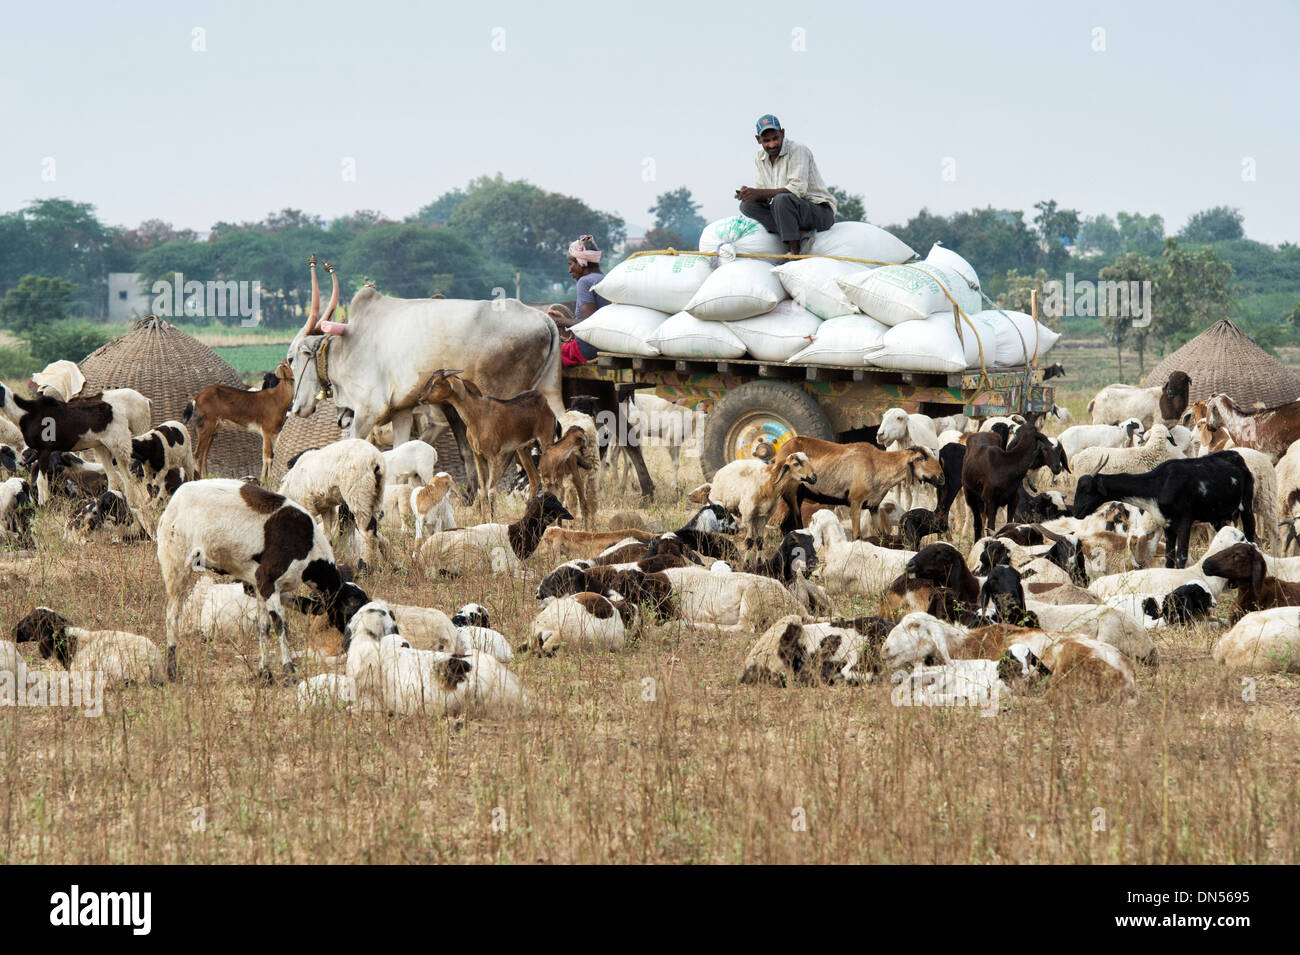 Bullock cart carrying bags of rice through a goat herd in a rural Indian field. Andhra Pradesh, India Stock Photo